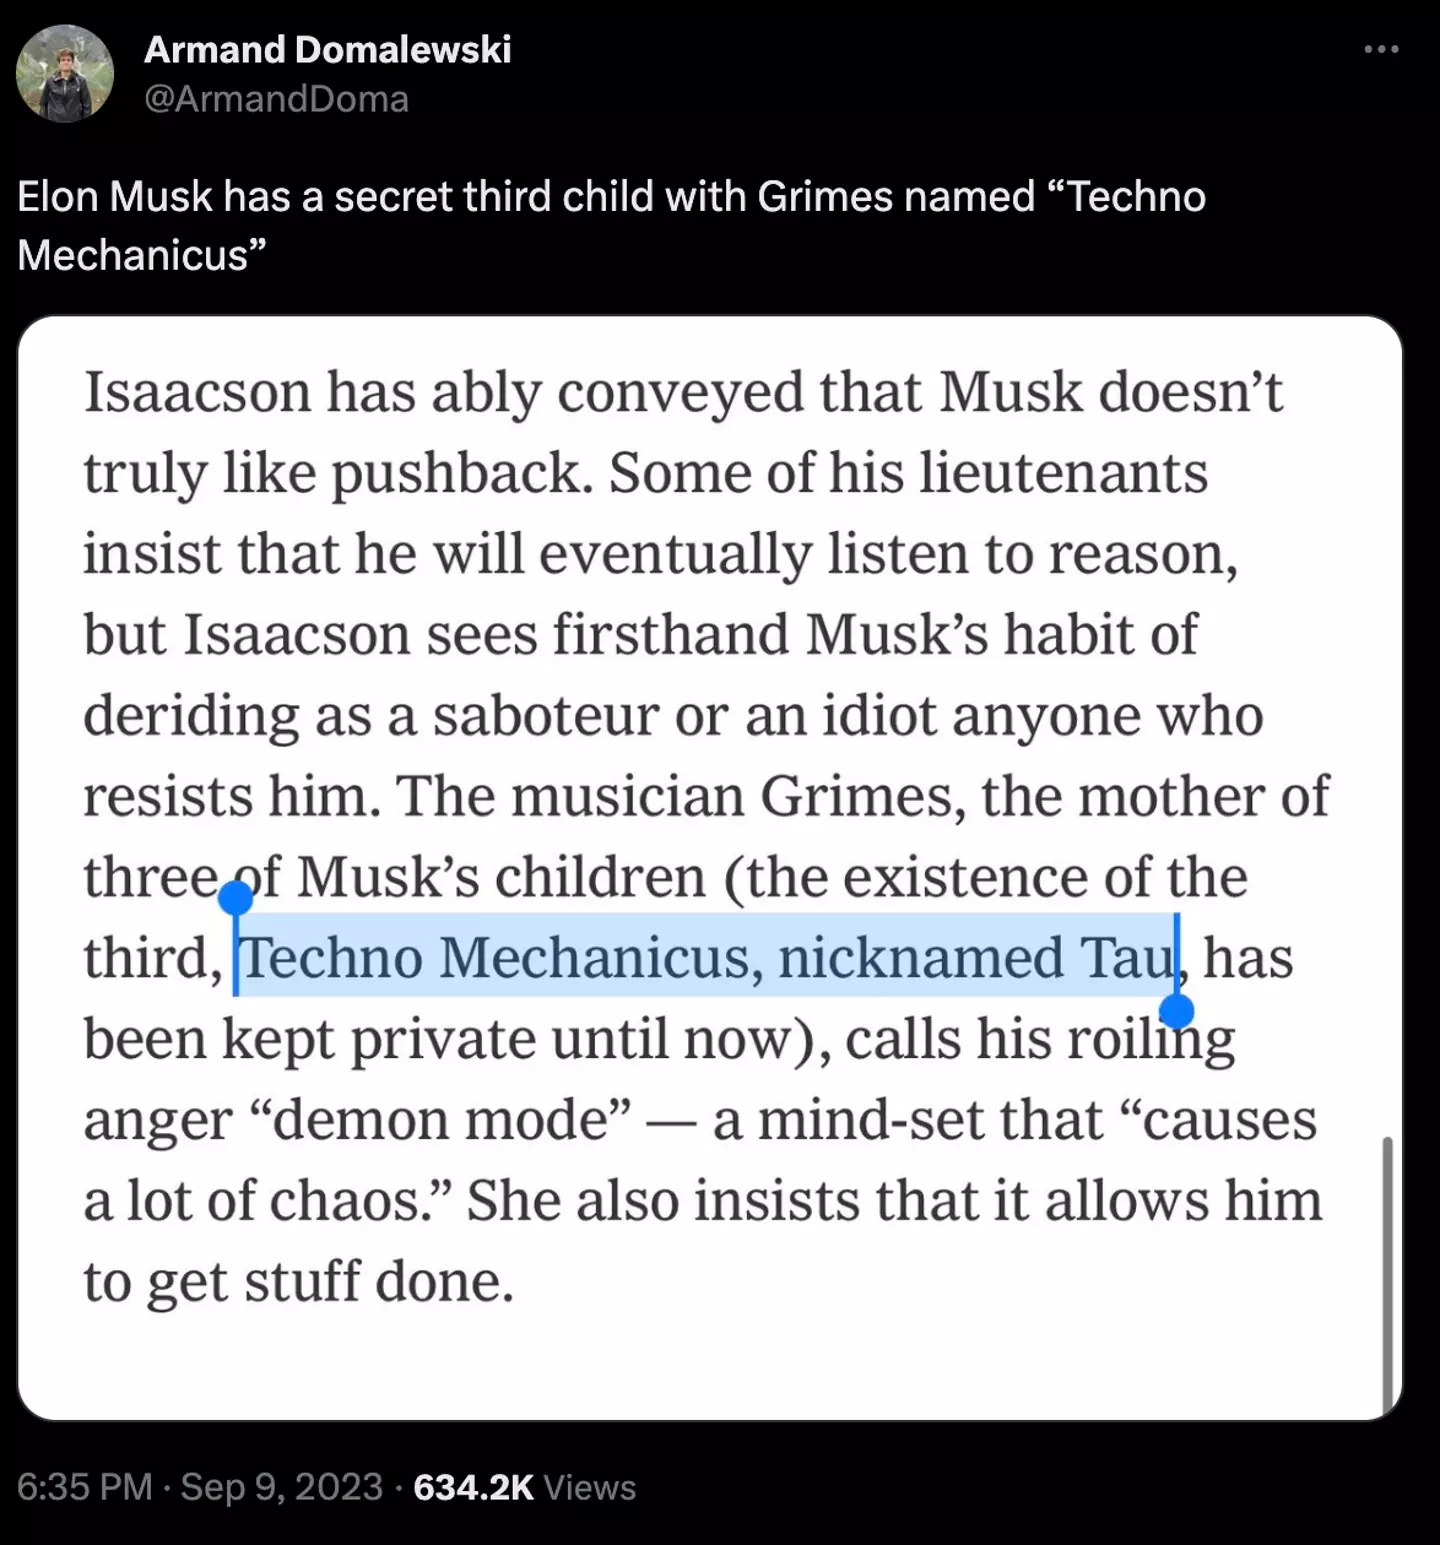 Their third child is called Techno Mechanicus.